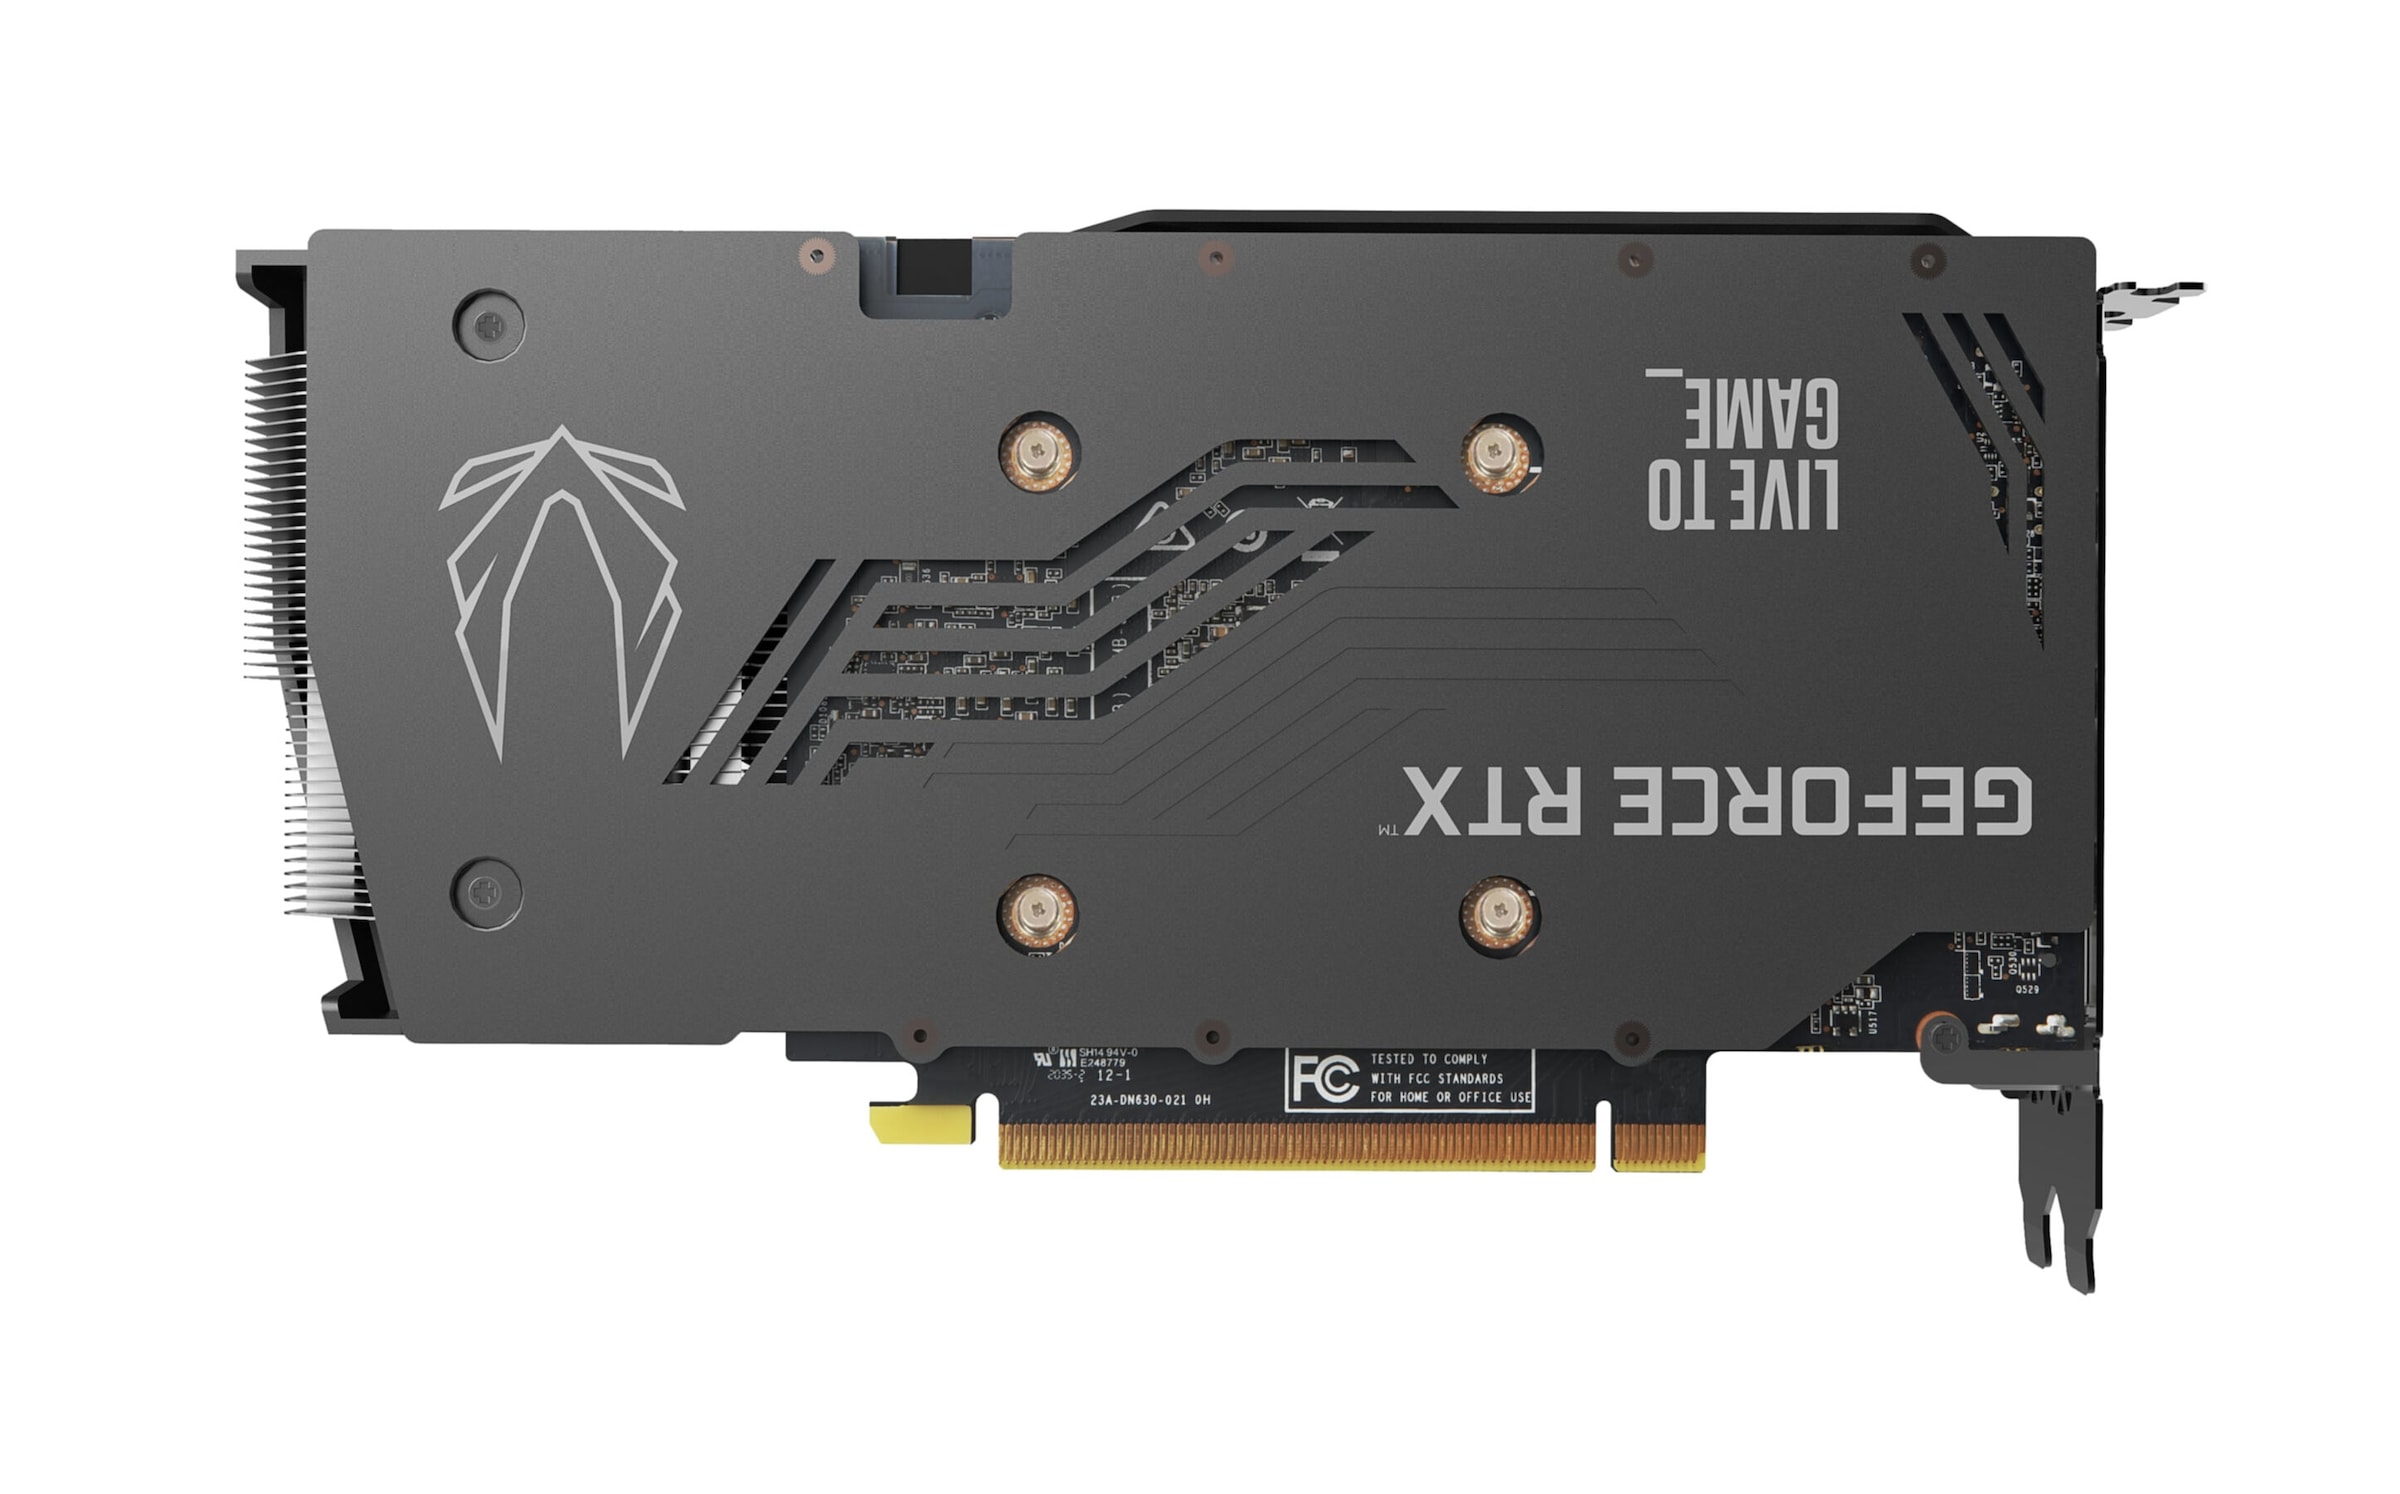 Zotac Grafikkarte »GAMING GeForce RTX 3060 Twin Edge OC«